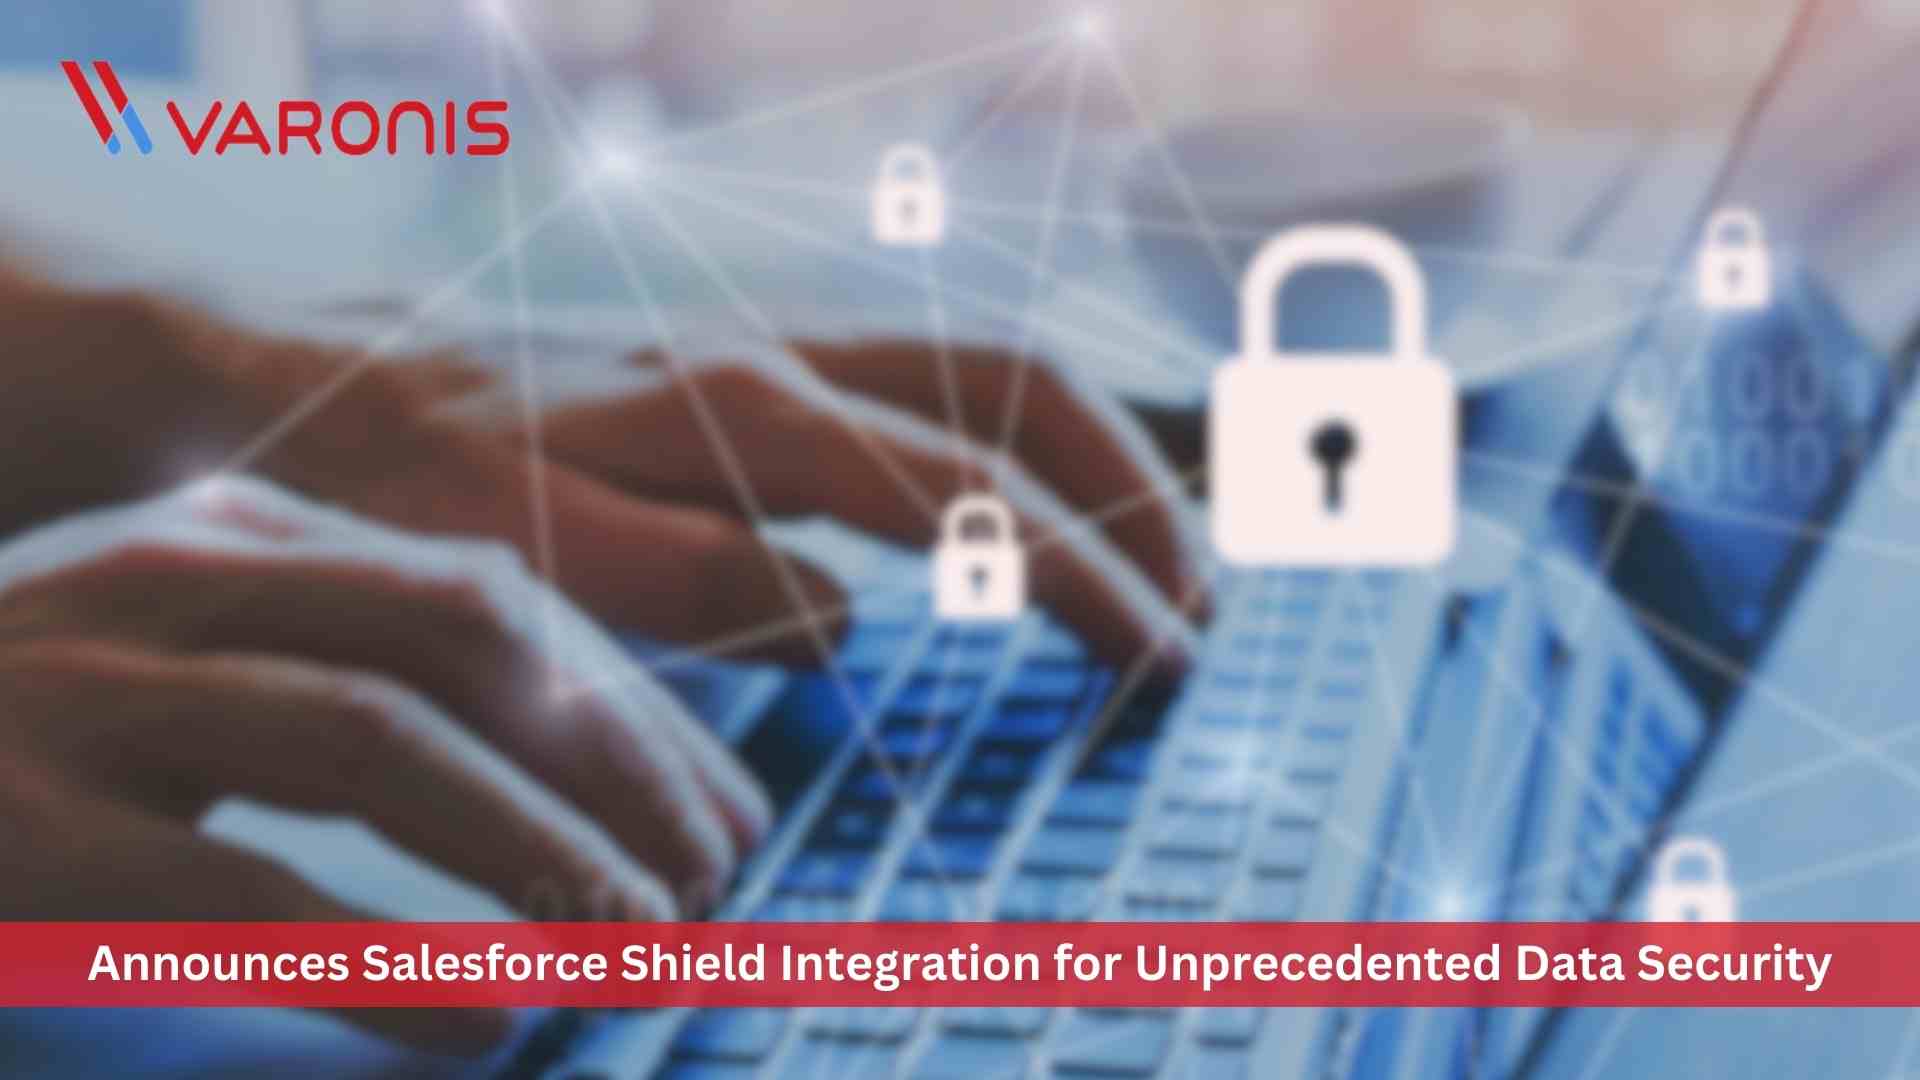 Varonis Announces Salesforce Shield Integration for Unprecedented Data Security